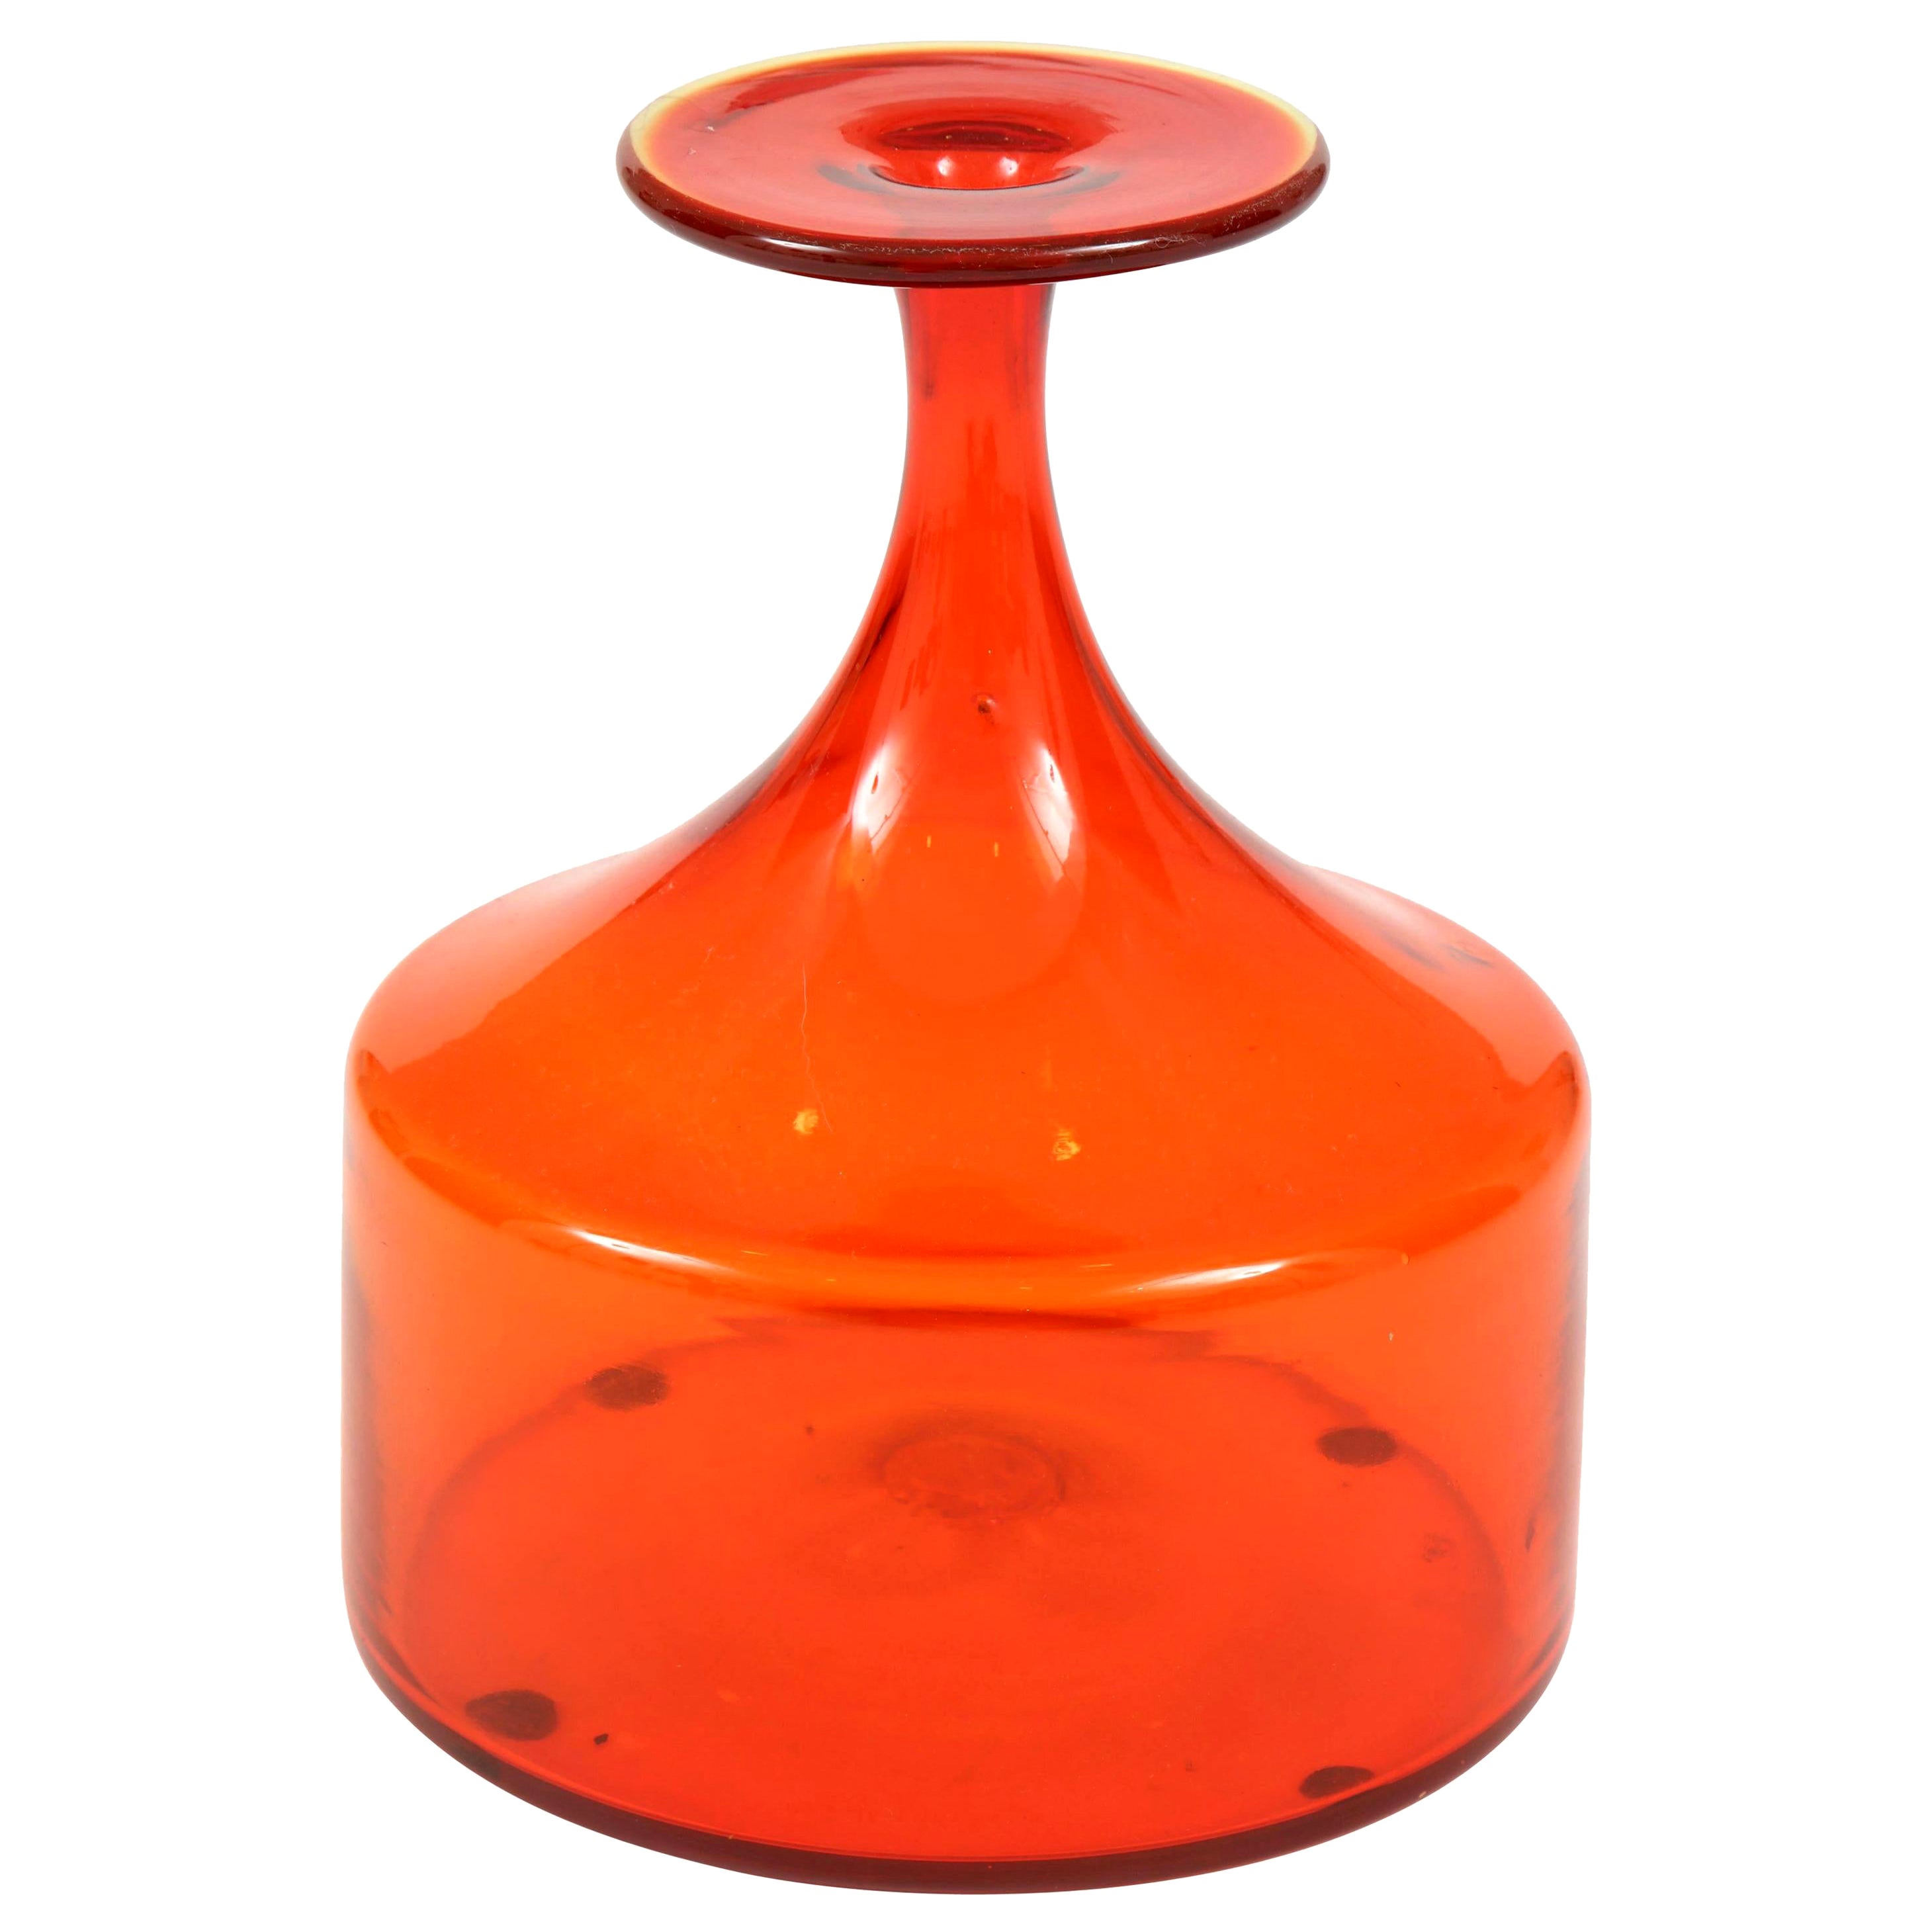 Vase, Glass, Midcentury, Greenwich Flint Craft, circa 1950, Orange Glass, USA